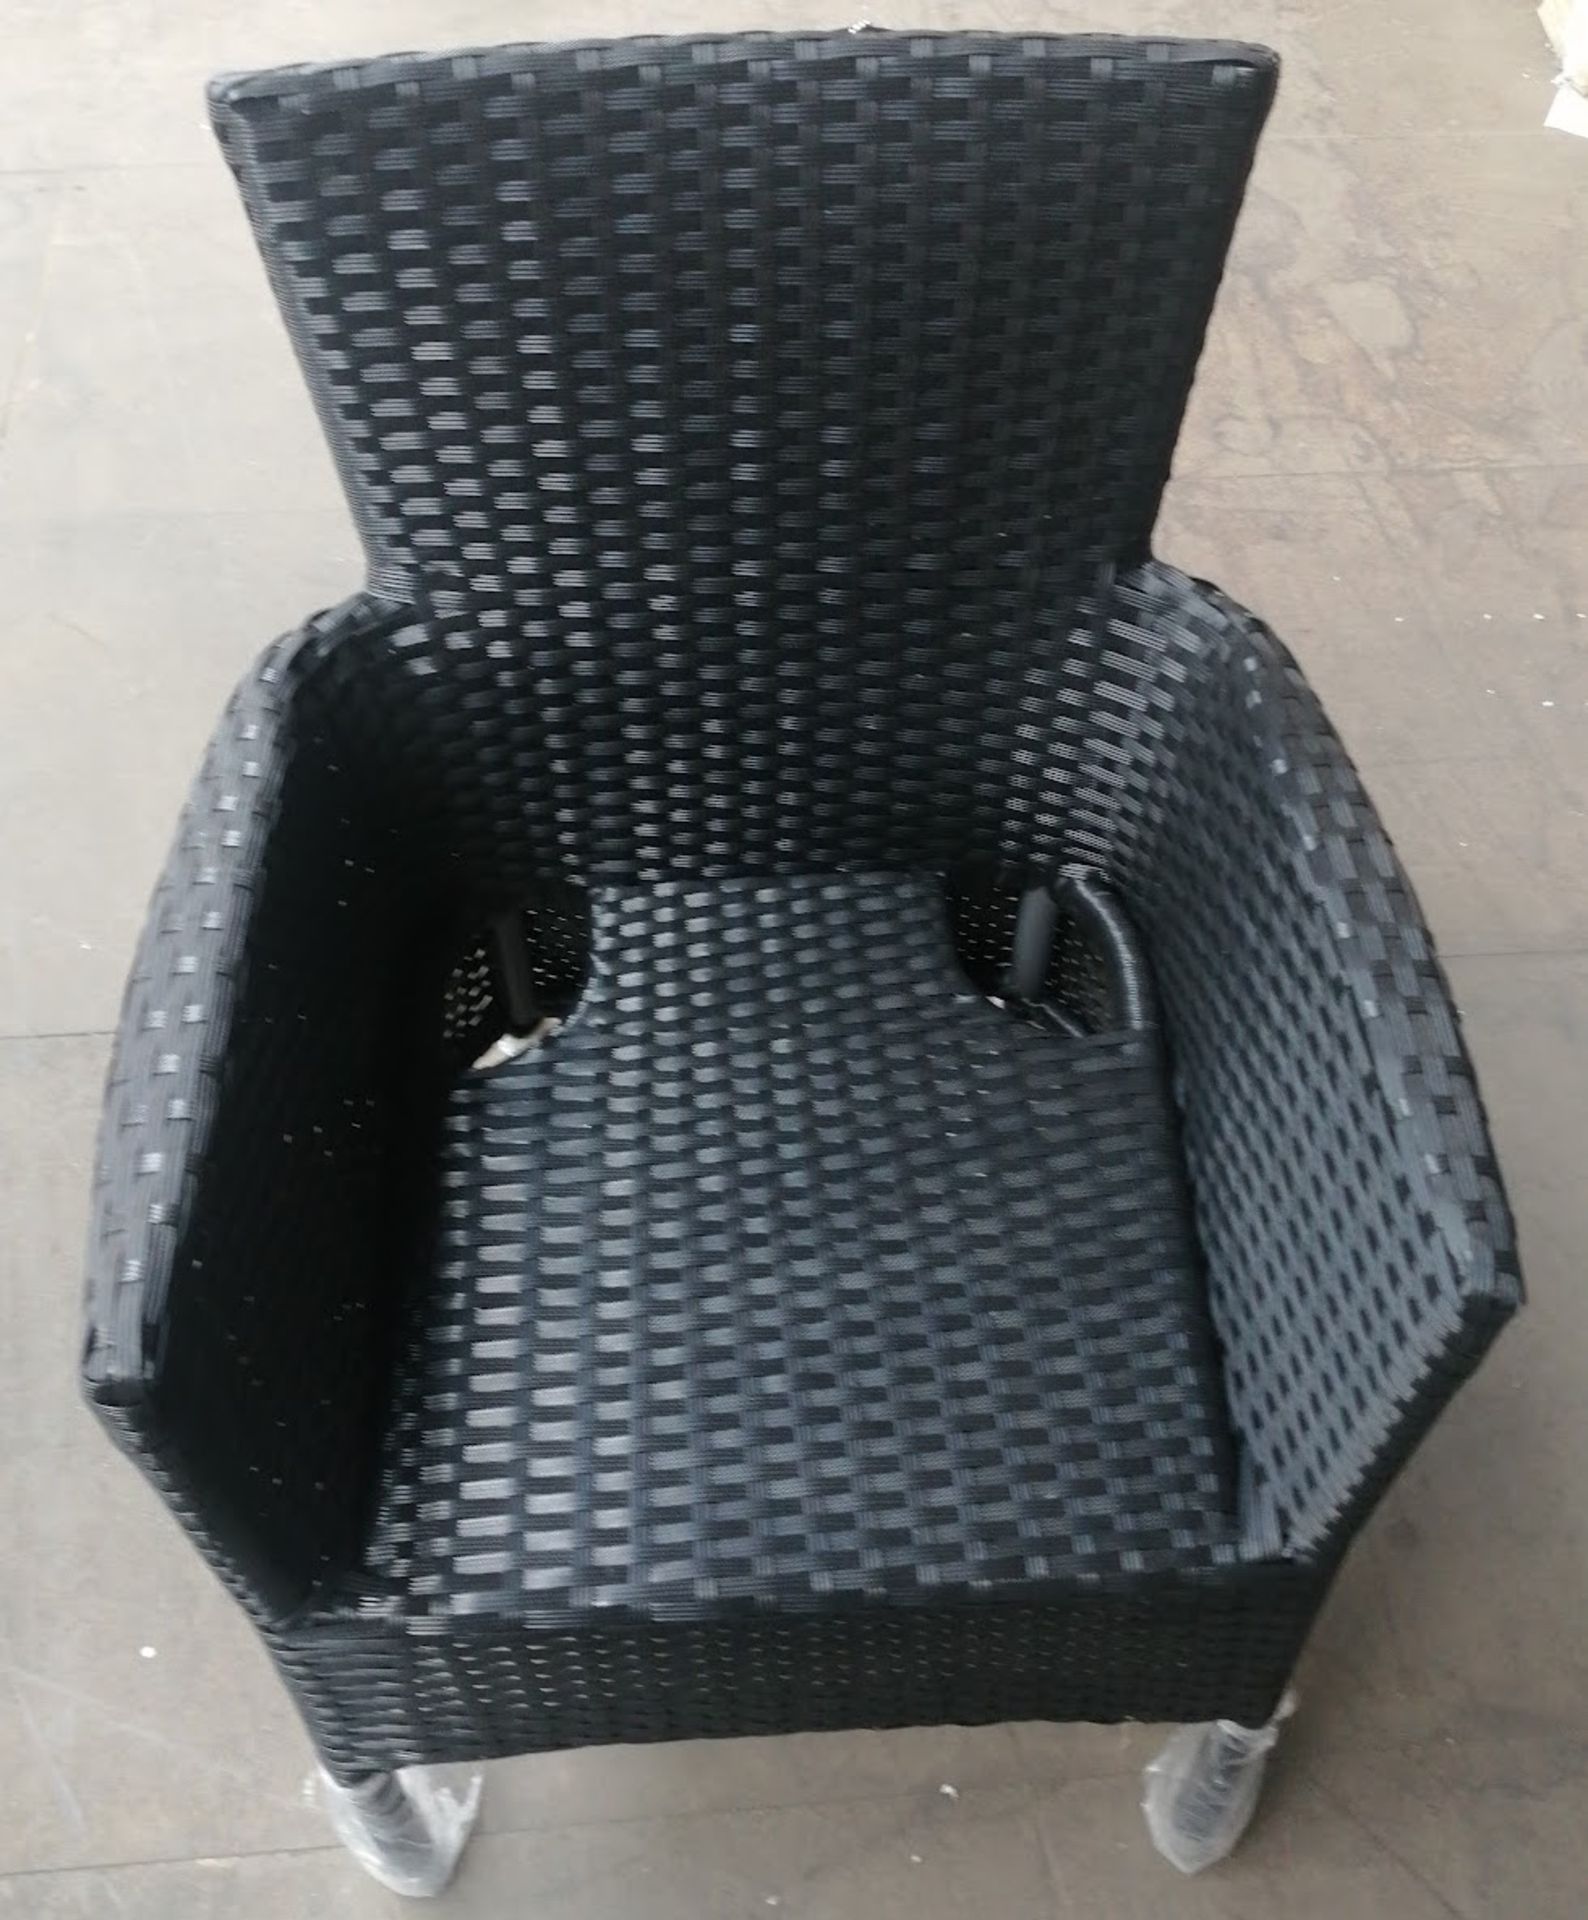 Authentic â€˜Rattanâ€™ Branded Chair - Black - Ex-Display!